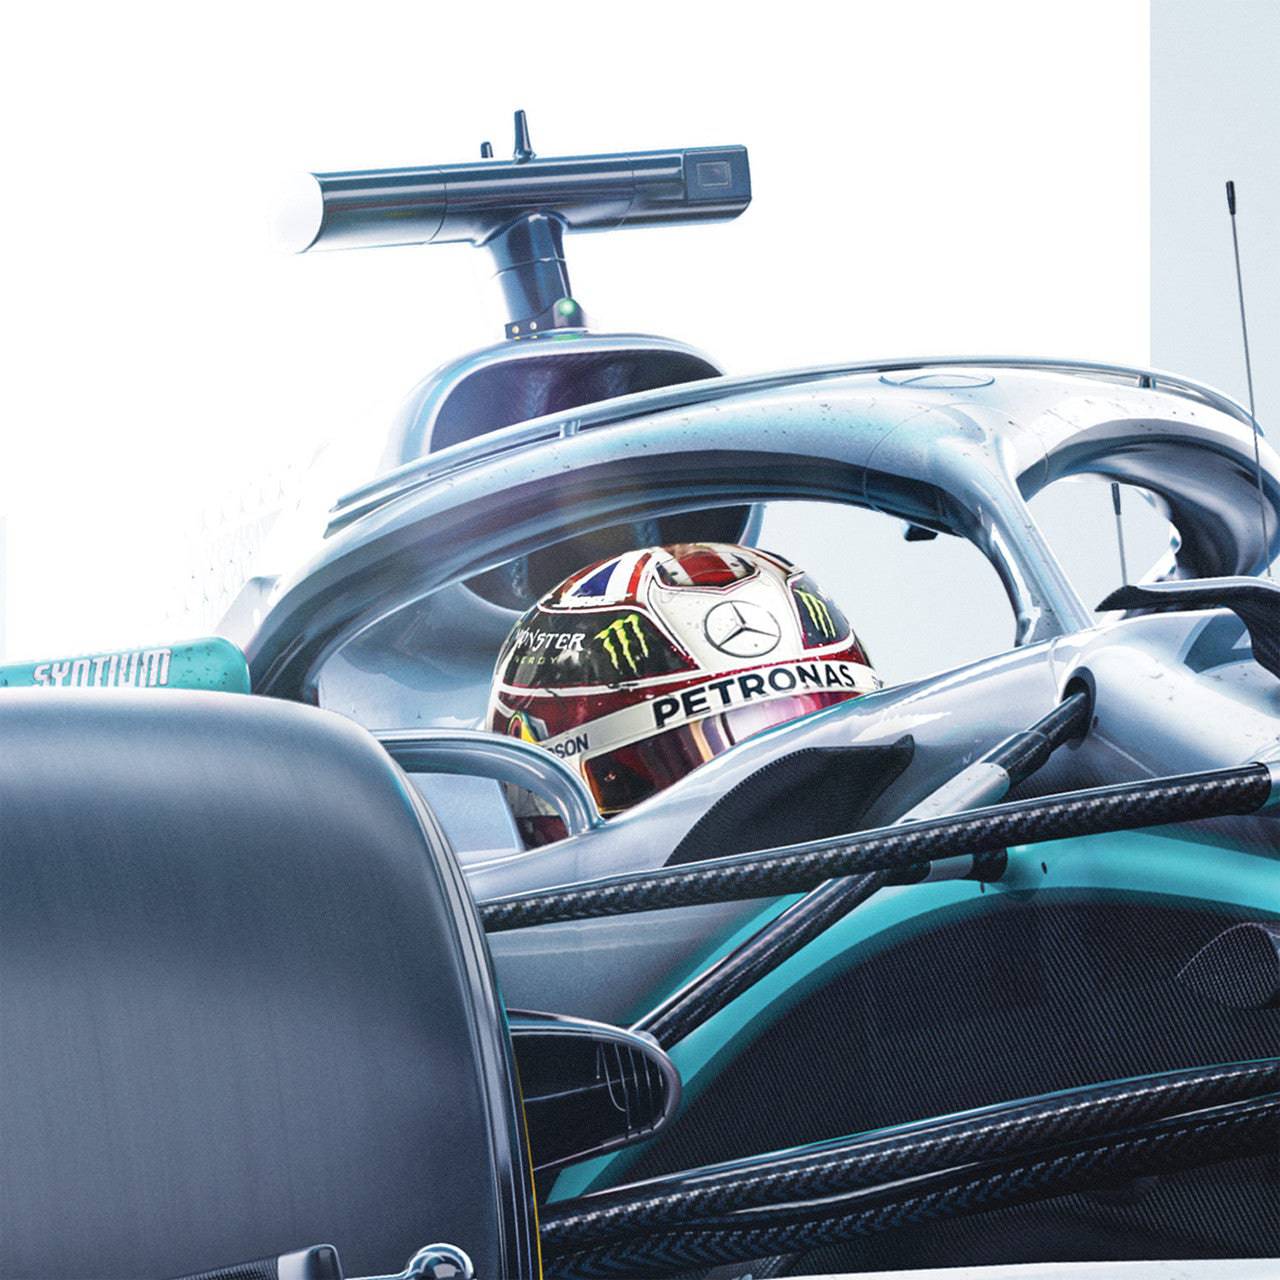 Mercedes-AMG Petronas Motorsport - 2019 - Lewis Hamilton - Limited Edition